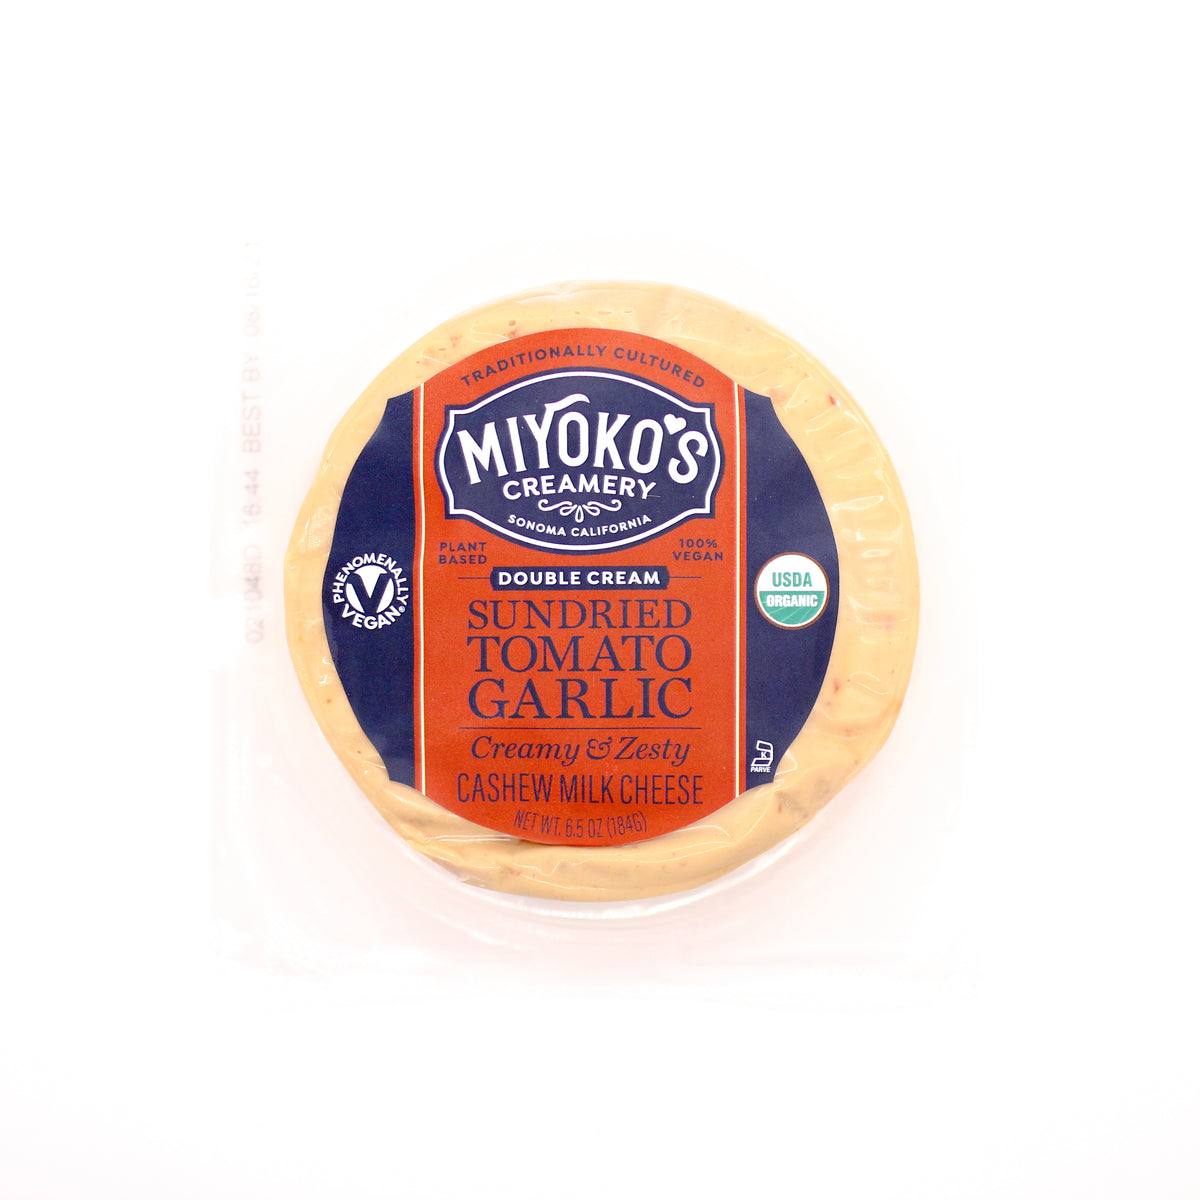 Miyokos Cheese Double Cream Sundried Tomato Garlic